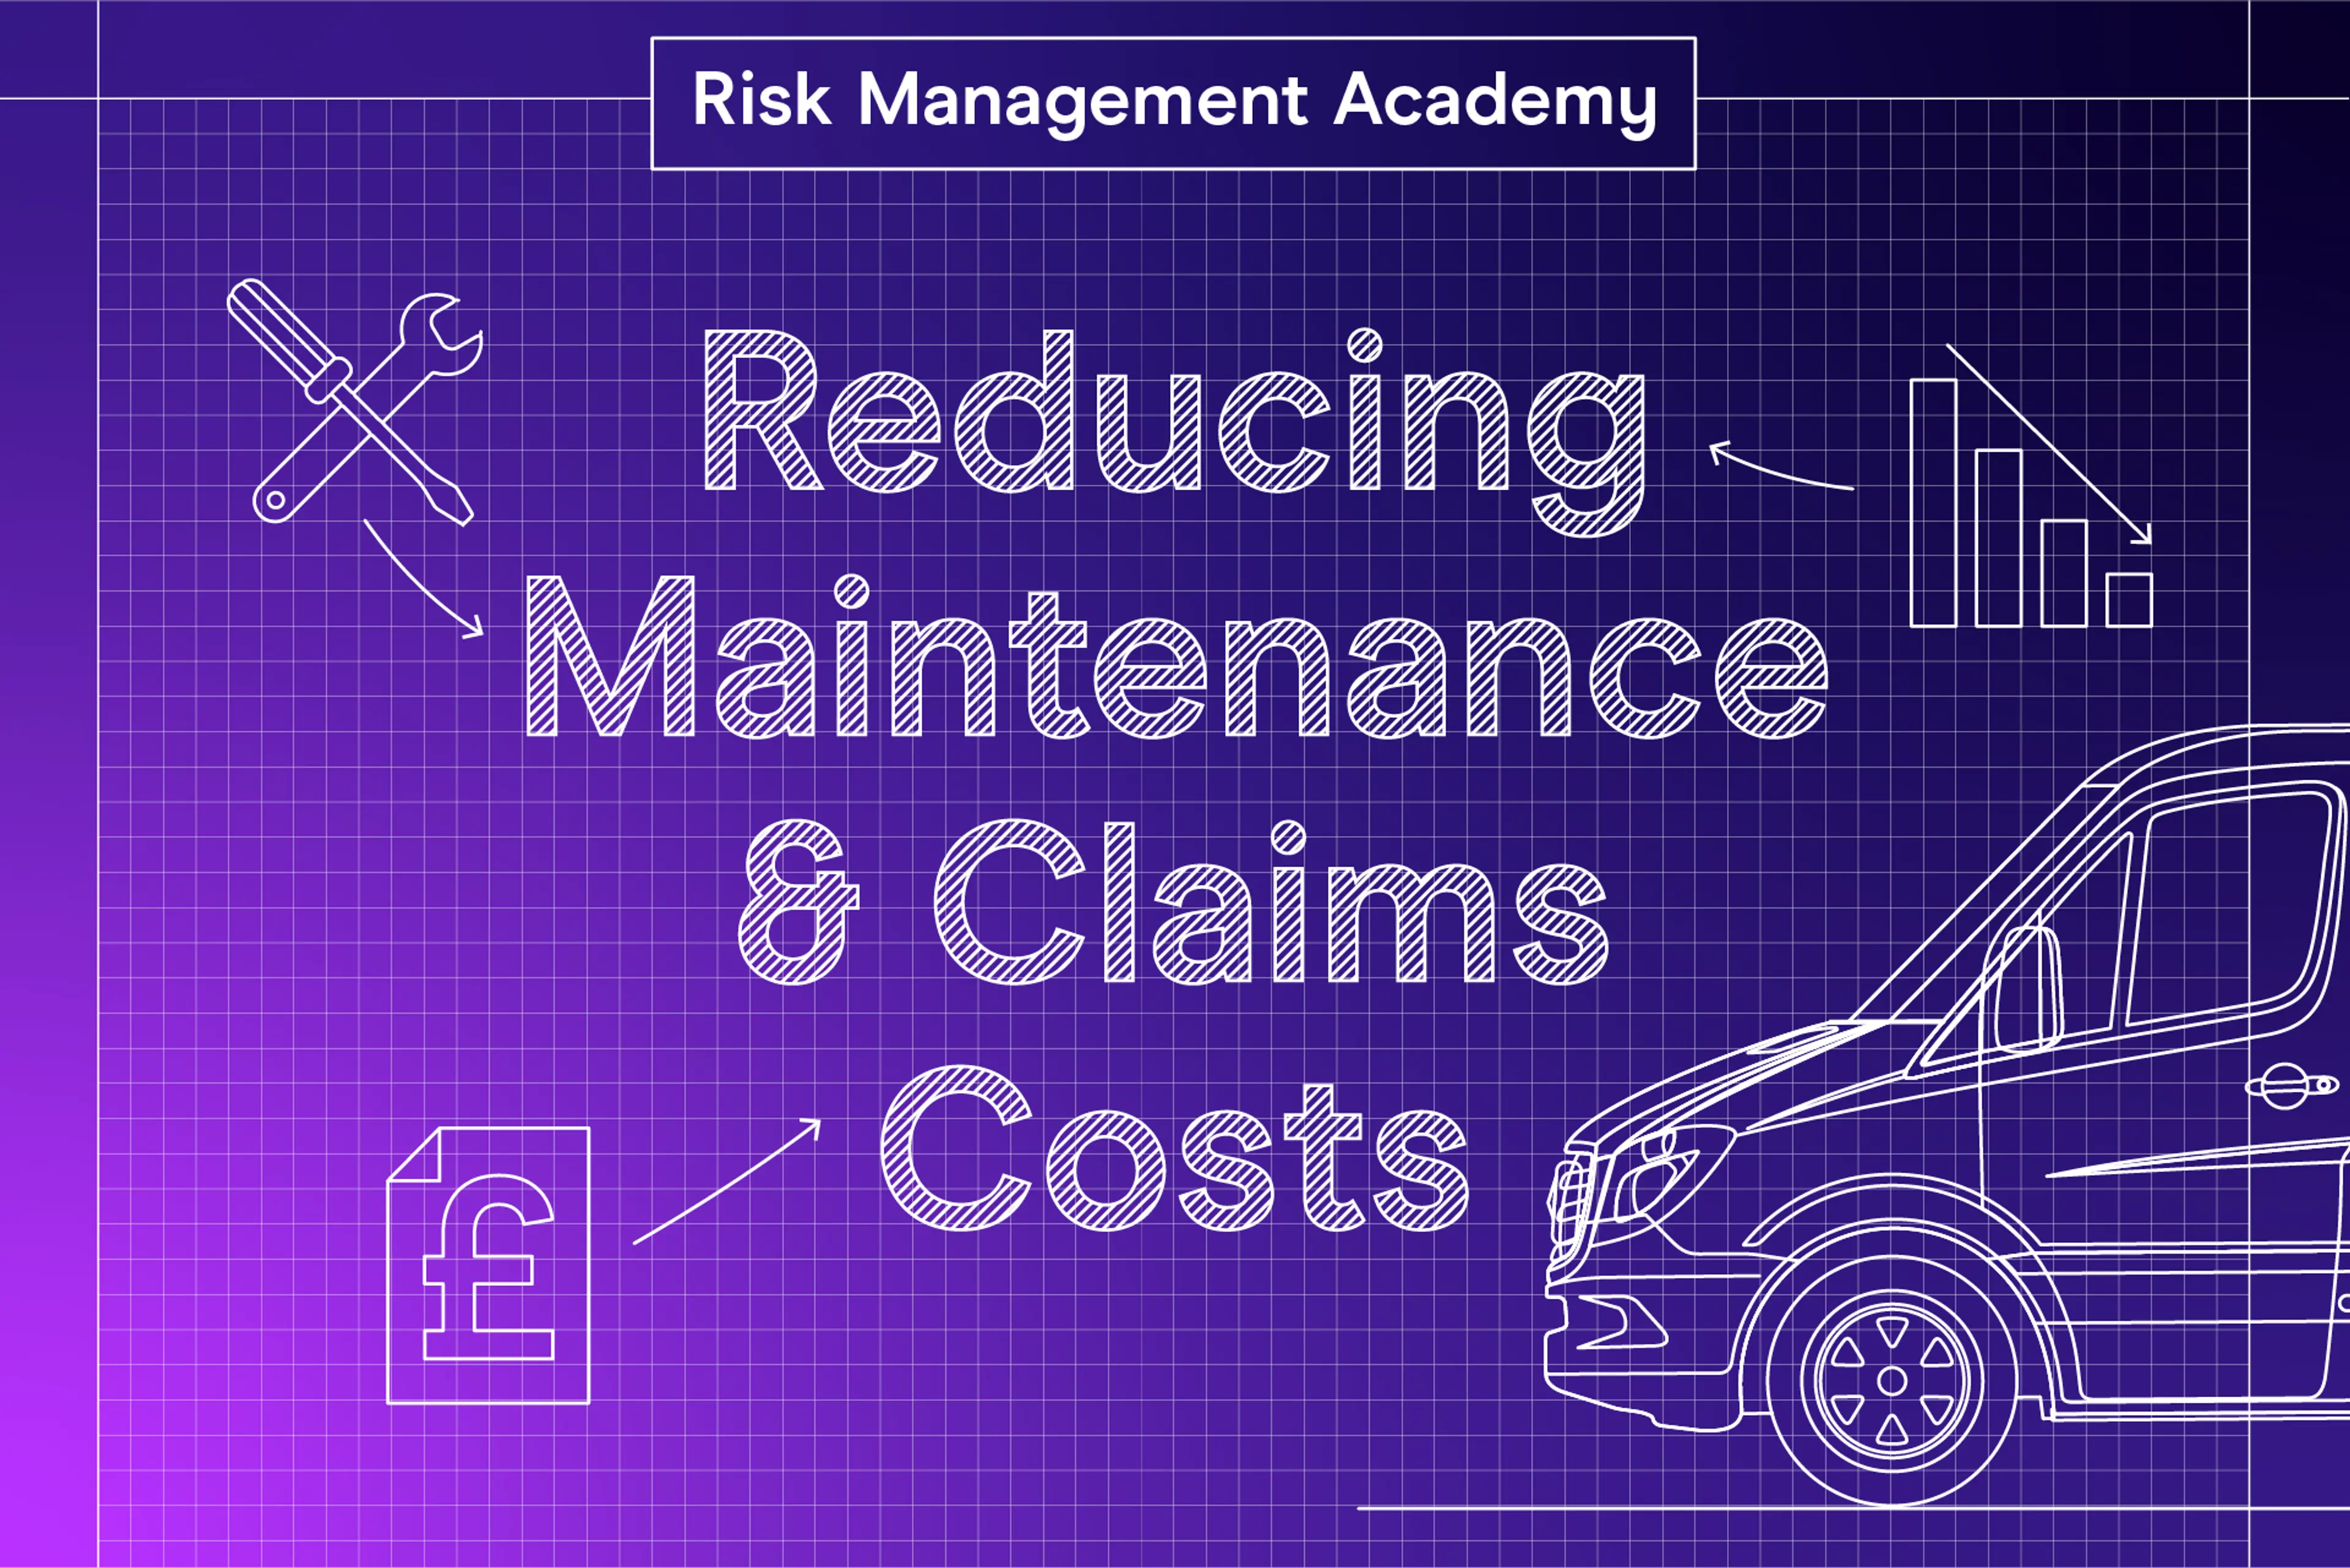 Risk Management Academy: Case Study